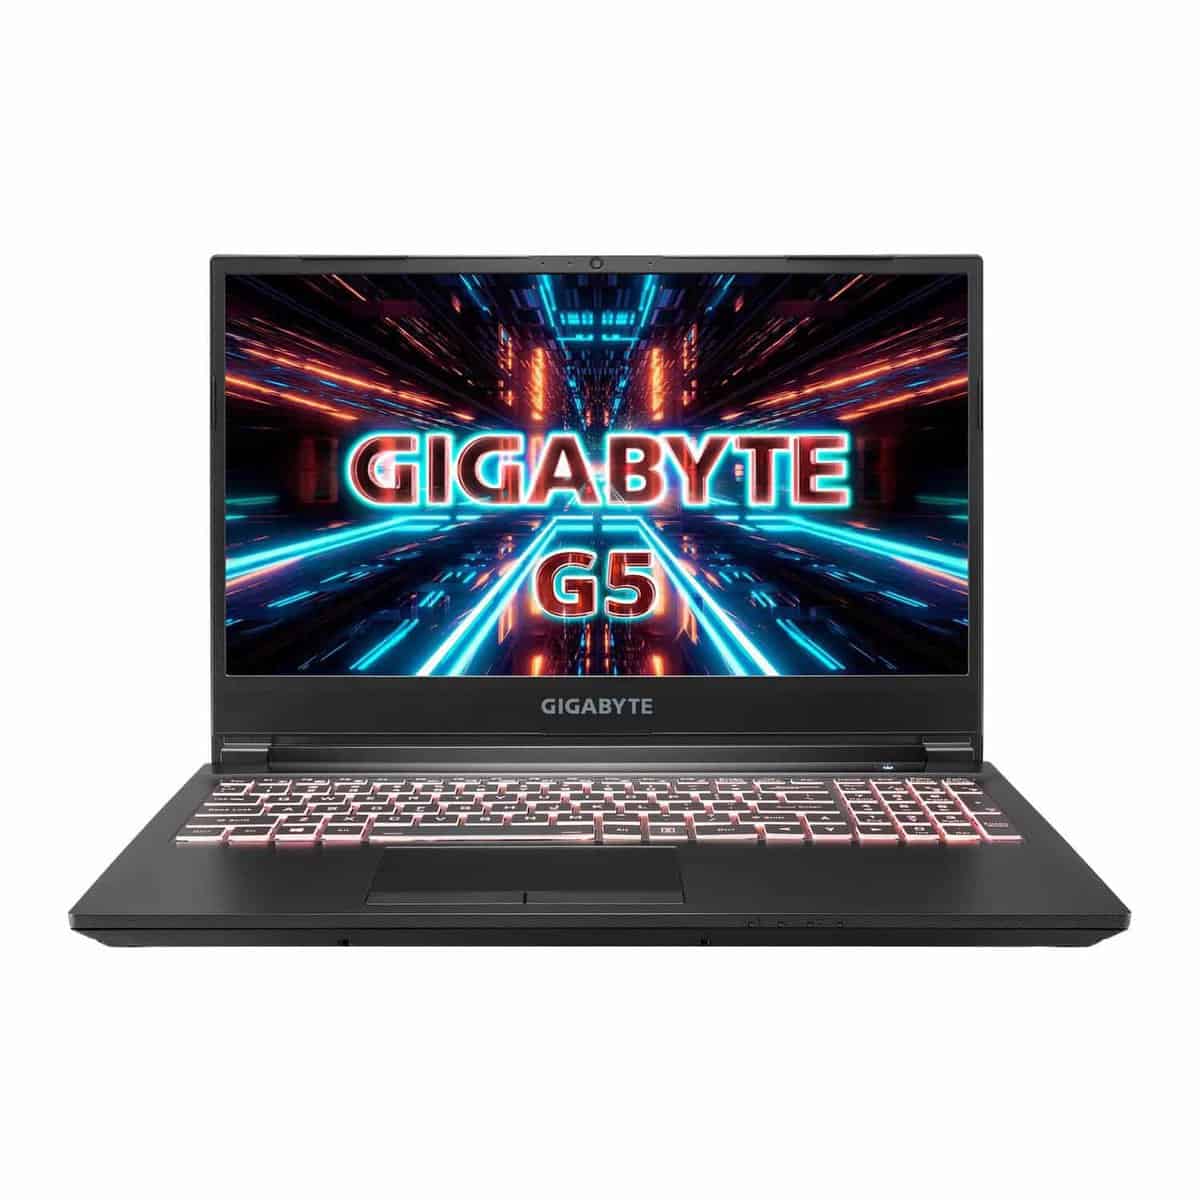 Best RTX 3050 Ti gaming laptop under $1000 - GIGABYTE G5 MD